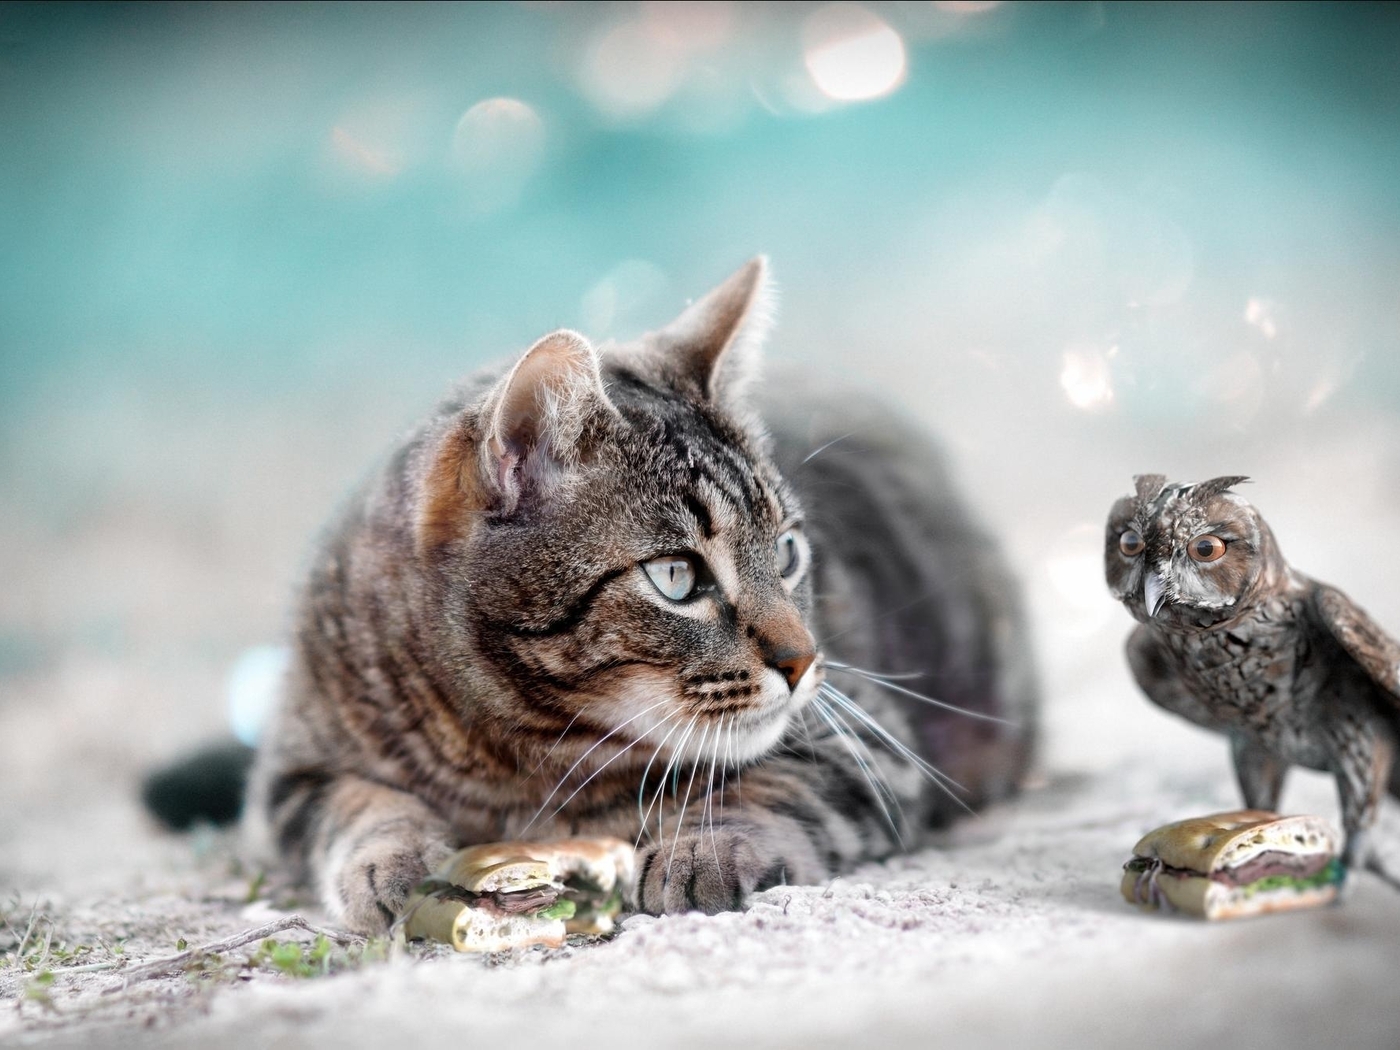 Image: Cat, muzzle, look, owl